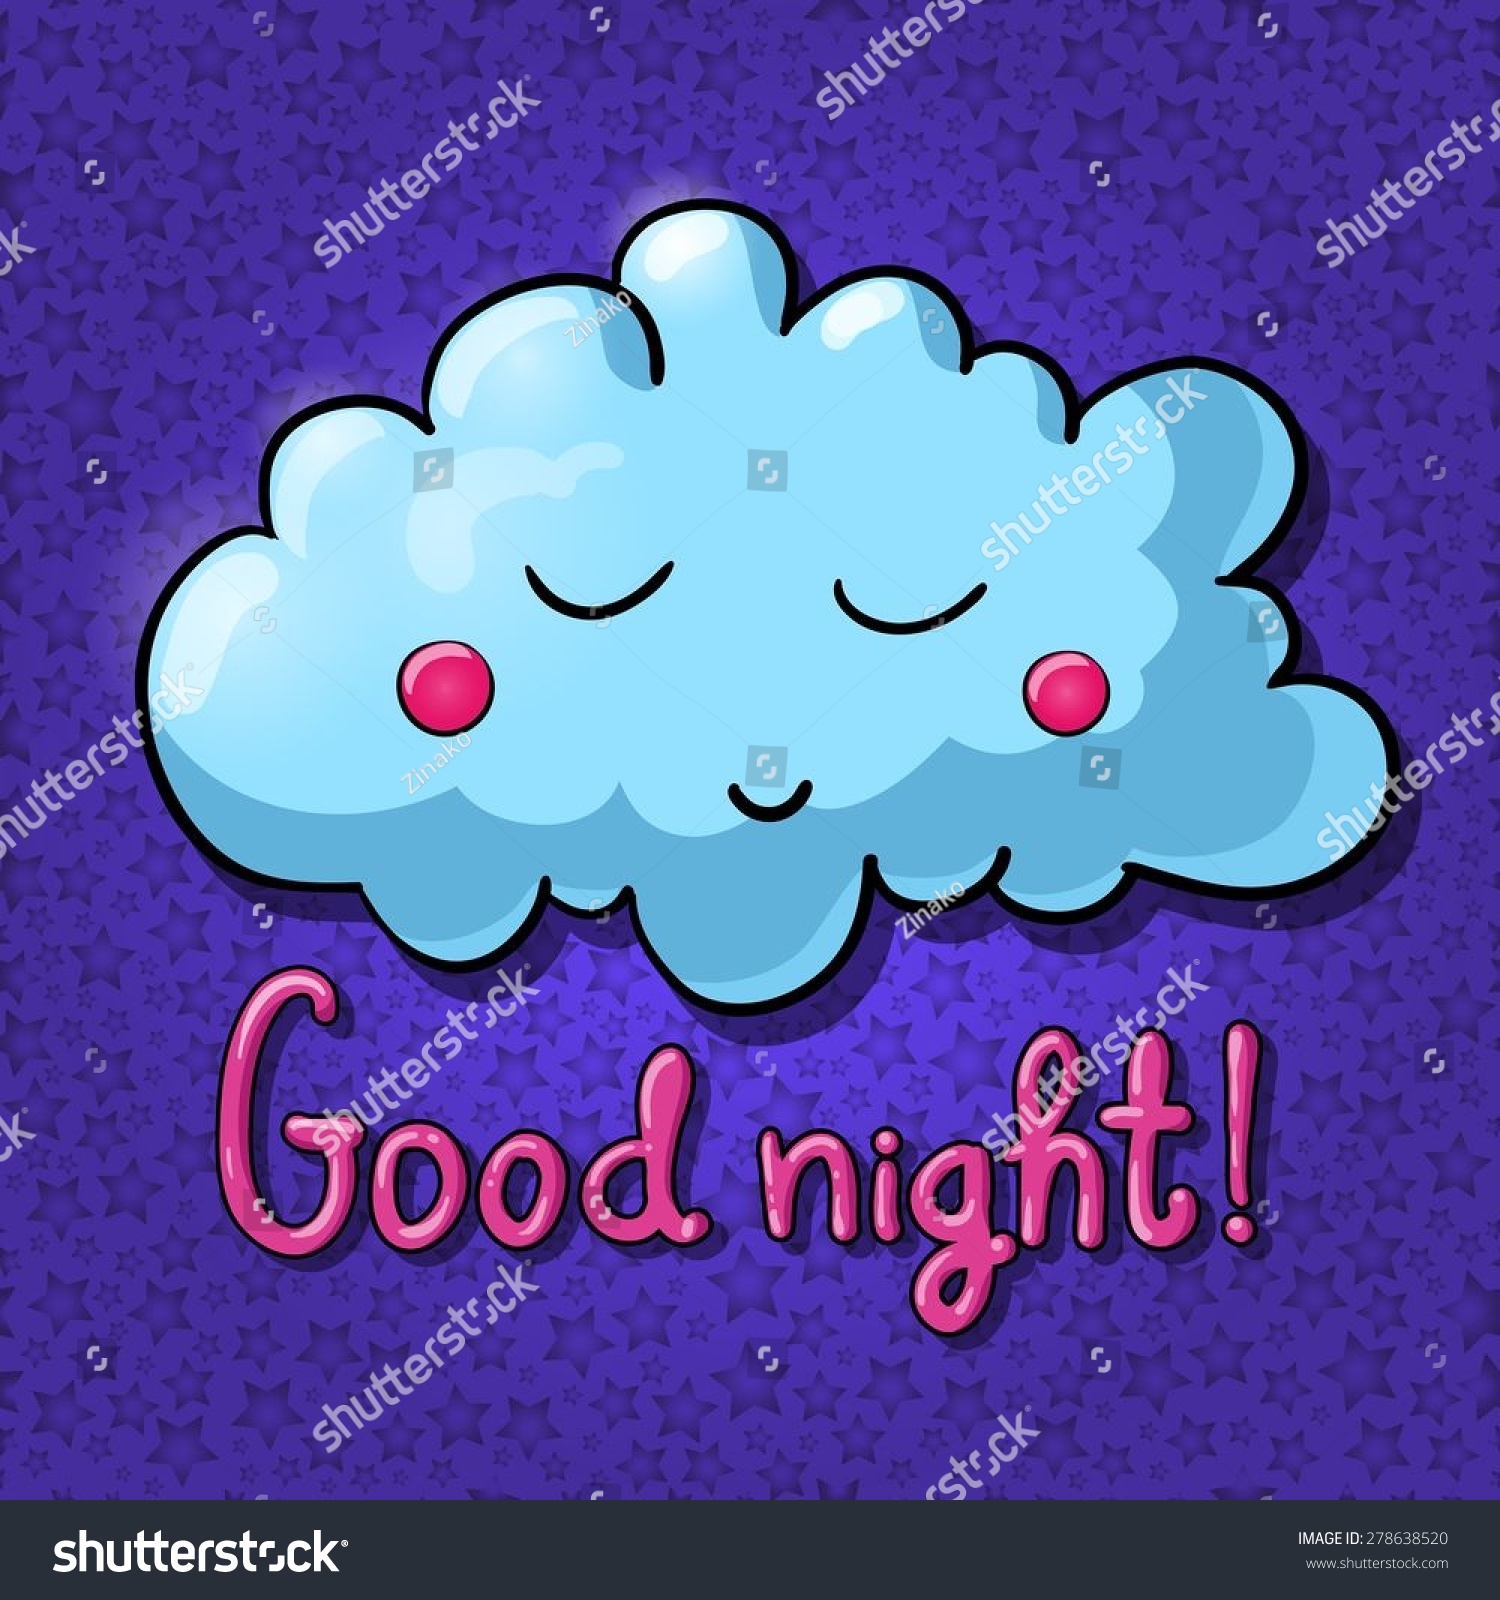 Cartoon Sleeping Cloud On Dark Background. Good Night! Vector ...